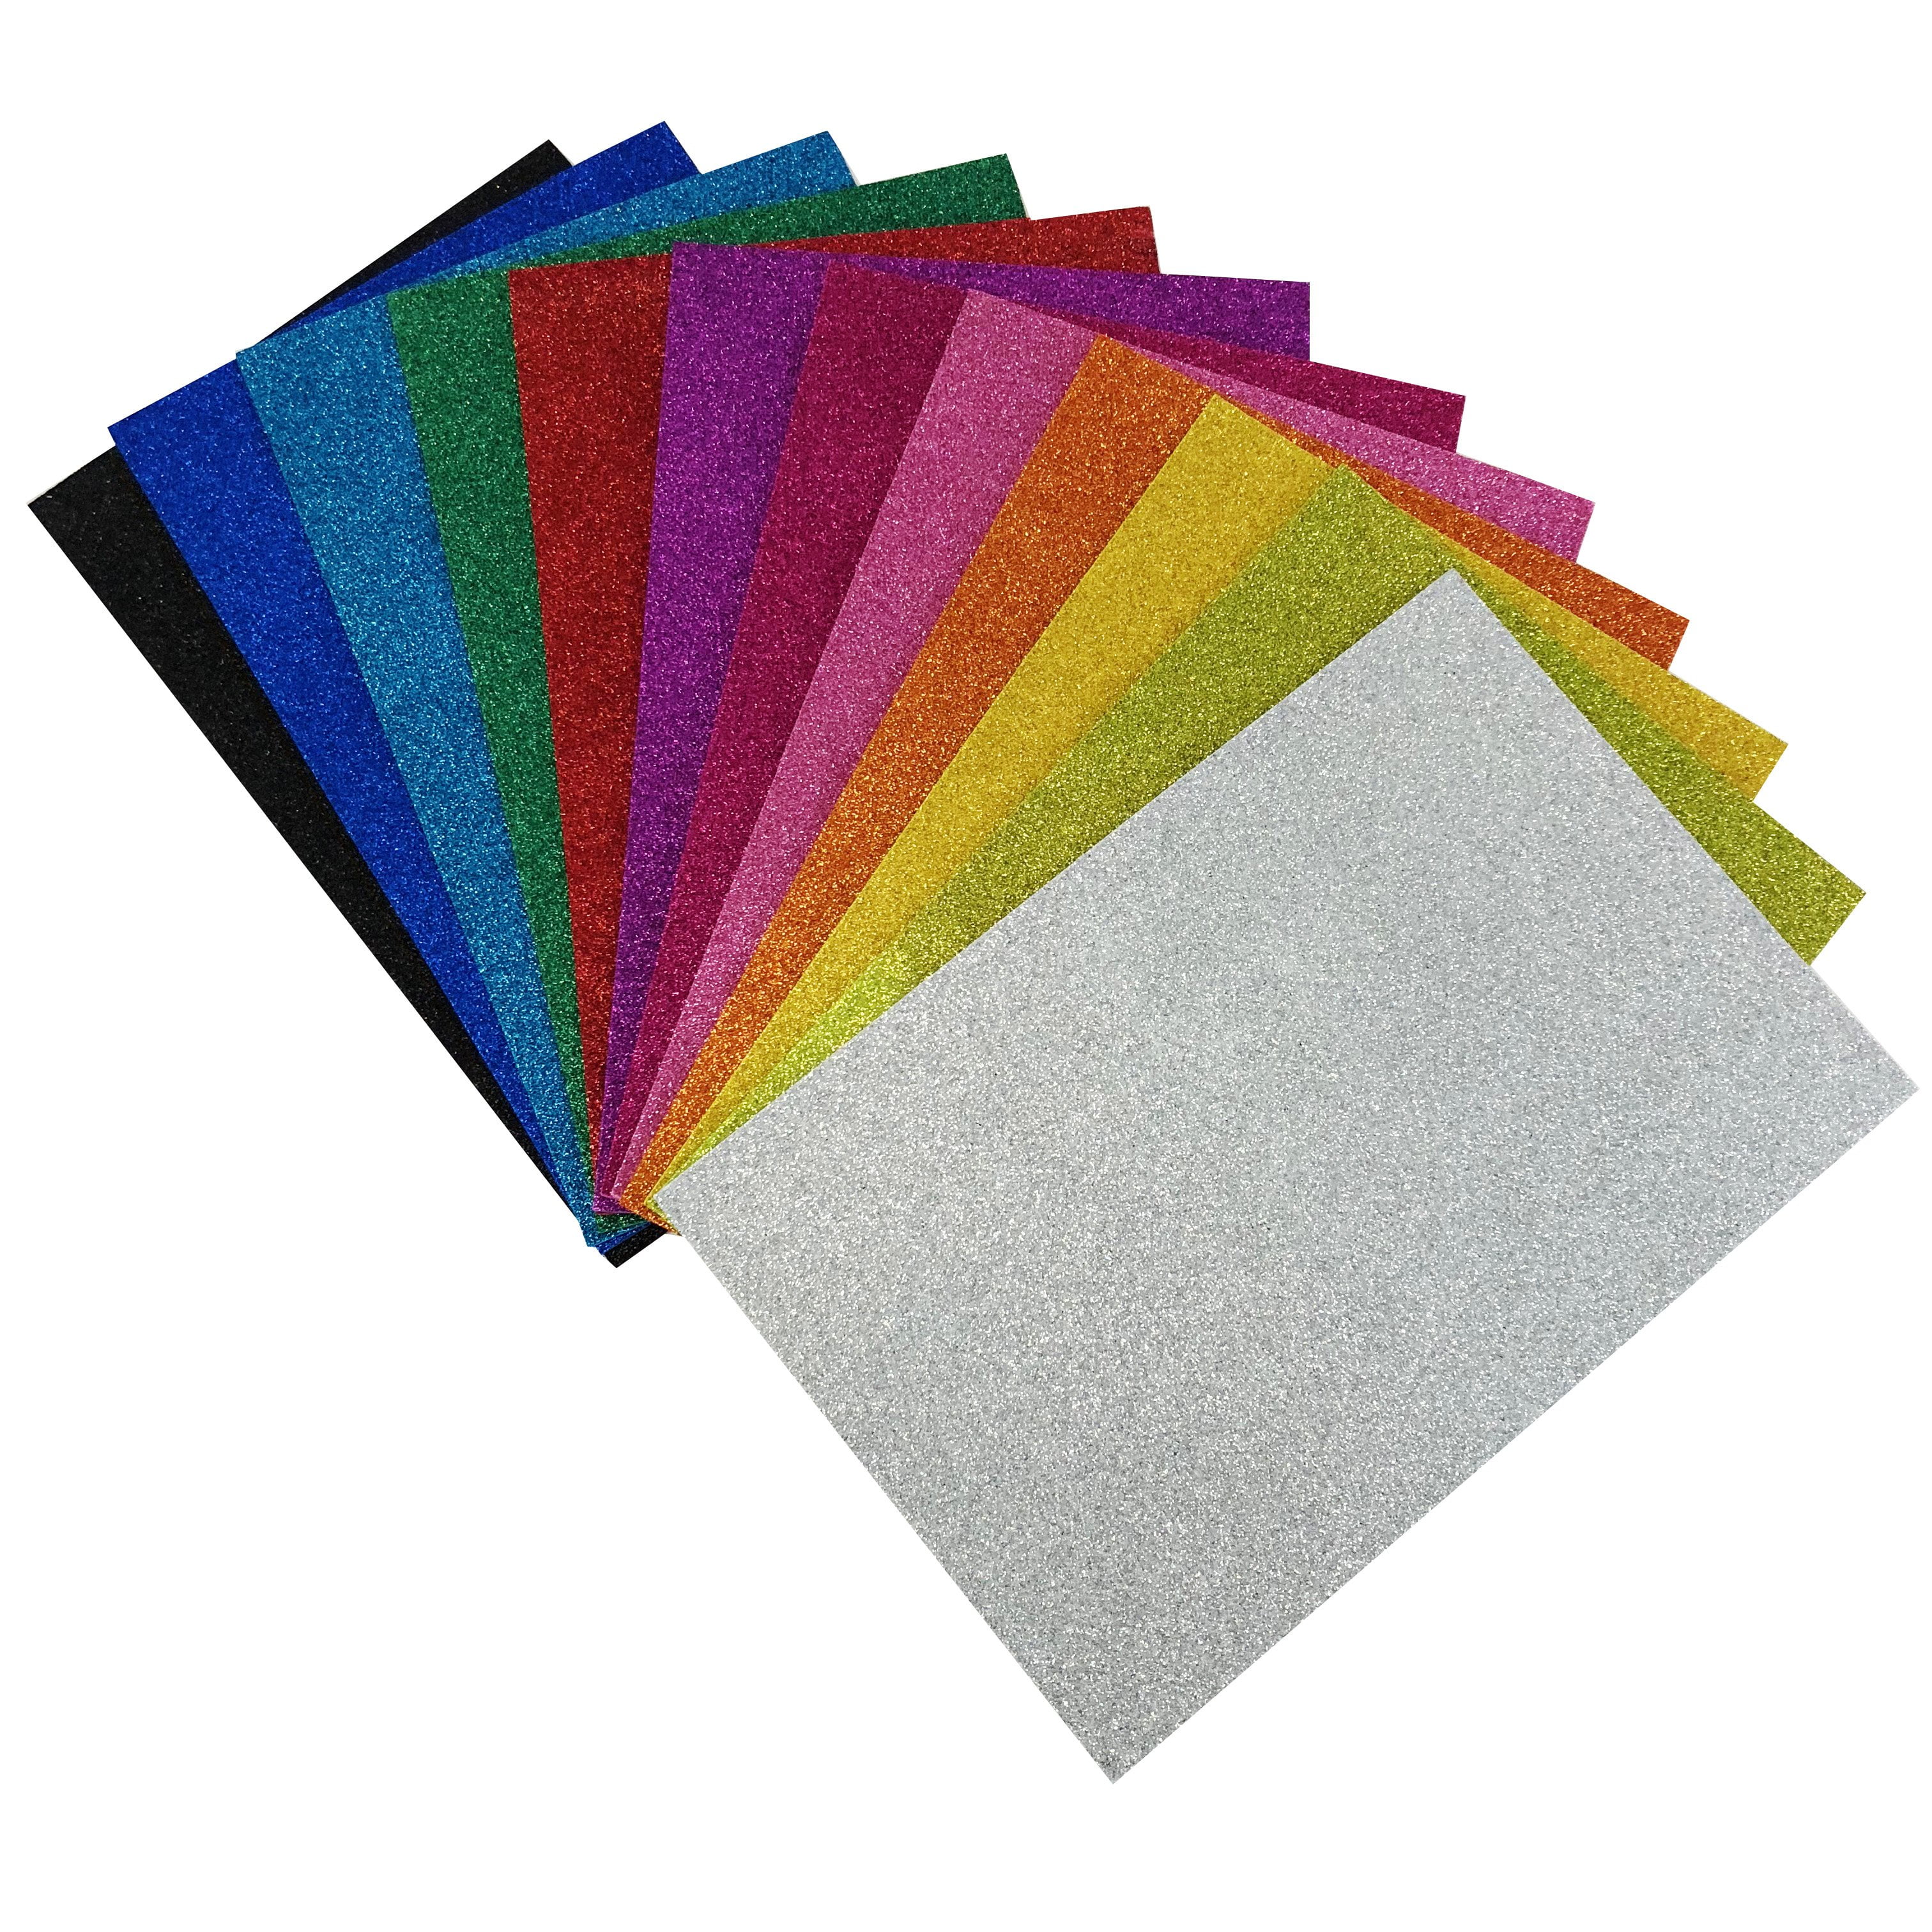 Allgala 12 Pack Glitter EVA Foam Paper 8 x 12inch Sheets-Black-CF85010